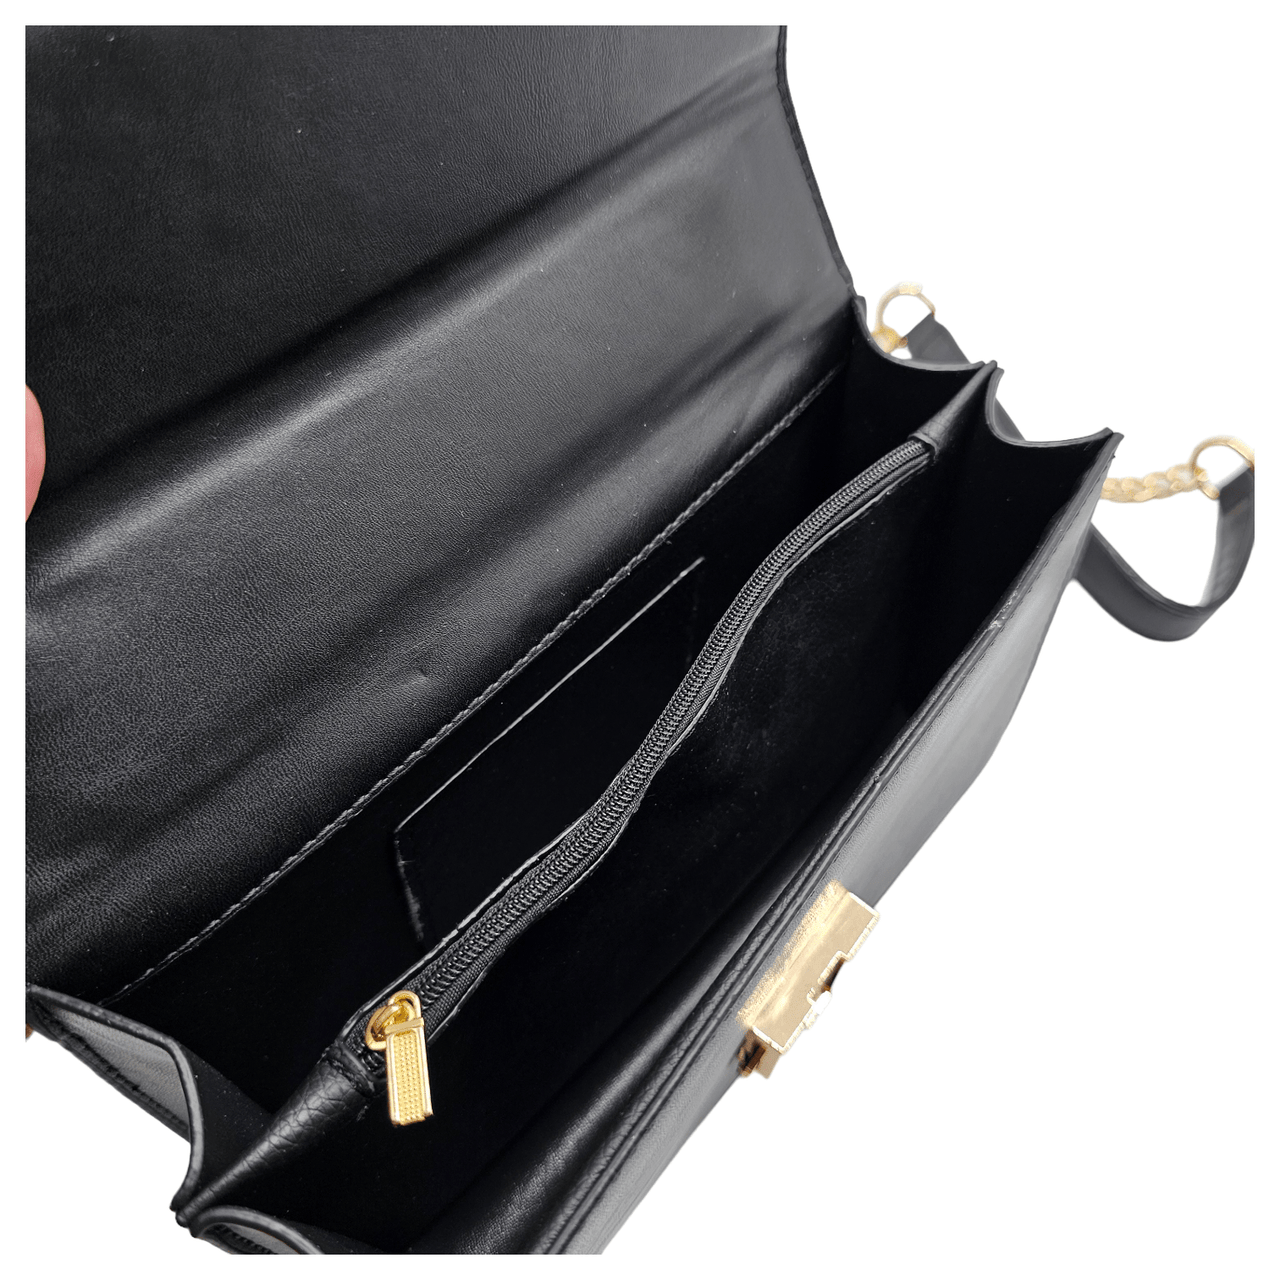 The Bag Couture Handbags, Wallets & Cases TOM FORD Logo Clasp Embossed Shoulder Bag Black